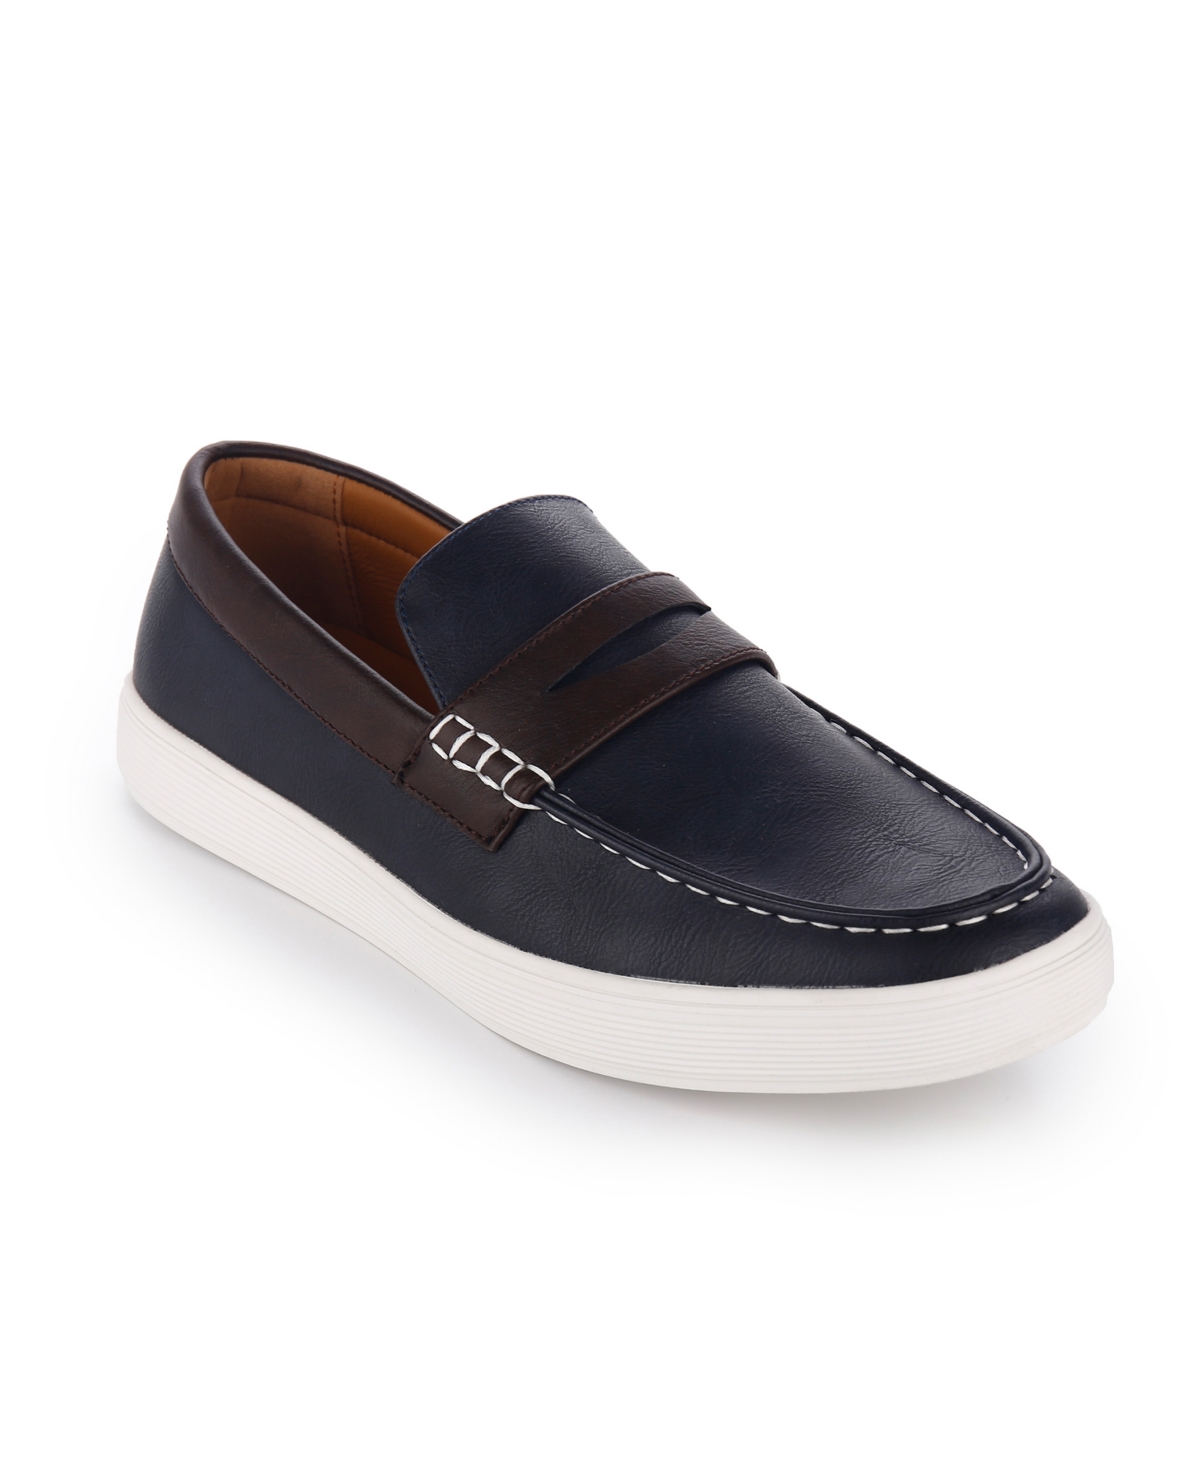 Men's Boat Shoes - Gray